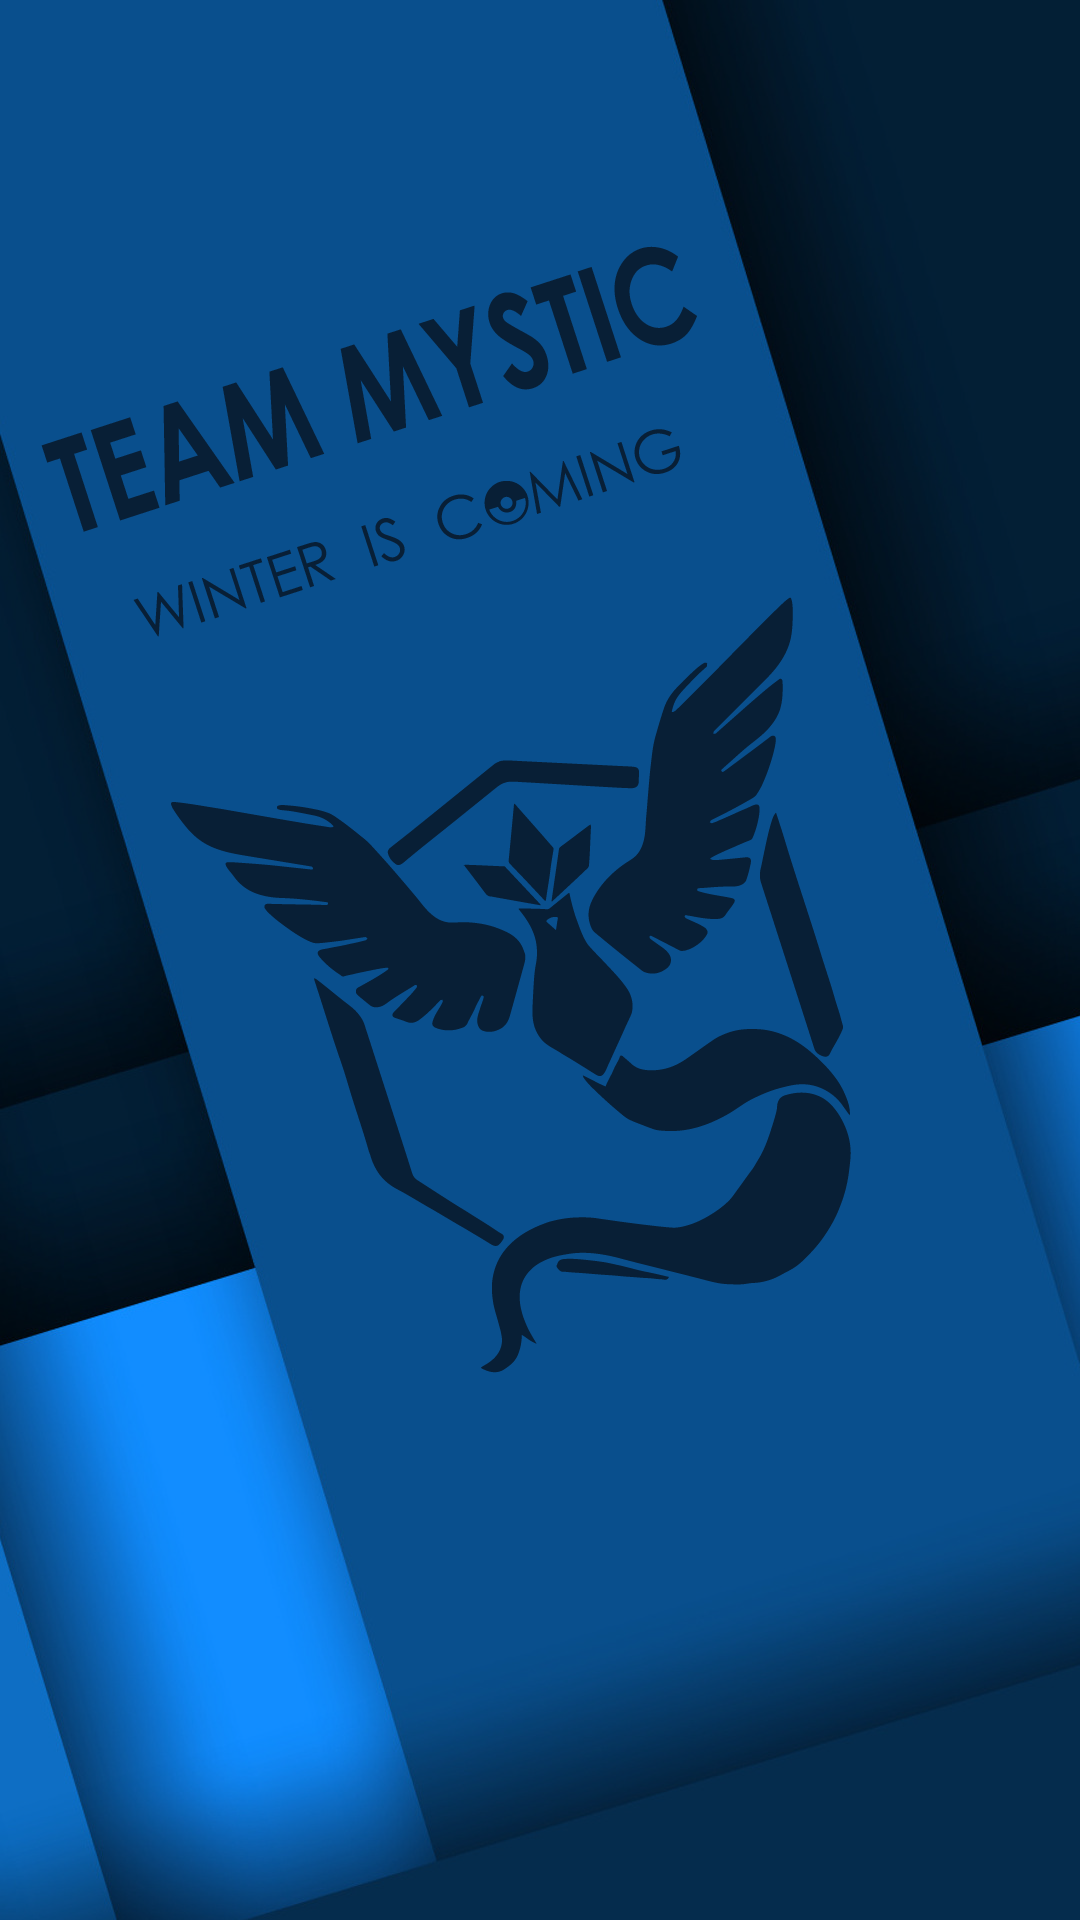 squadra mistica live wallpaper,blu,design,copertina del libro,font,tecnologia